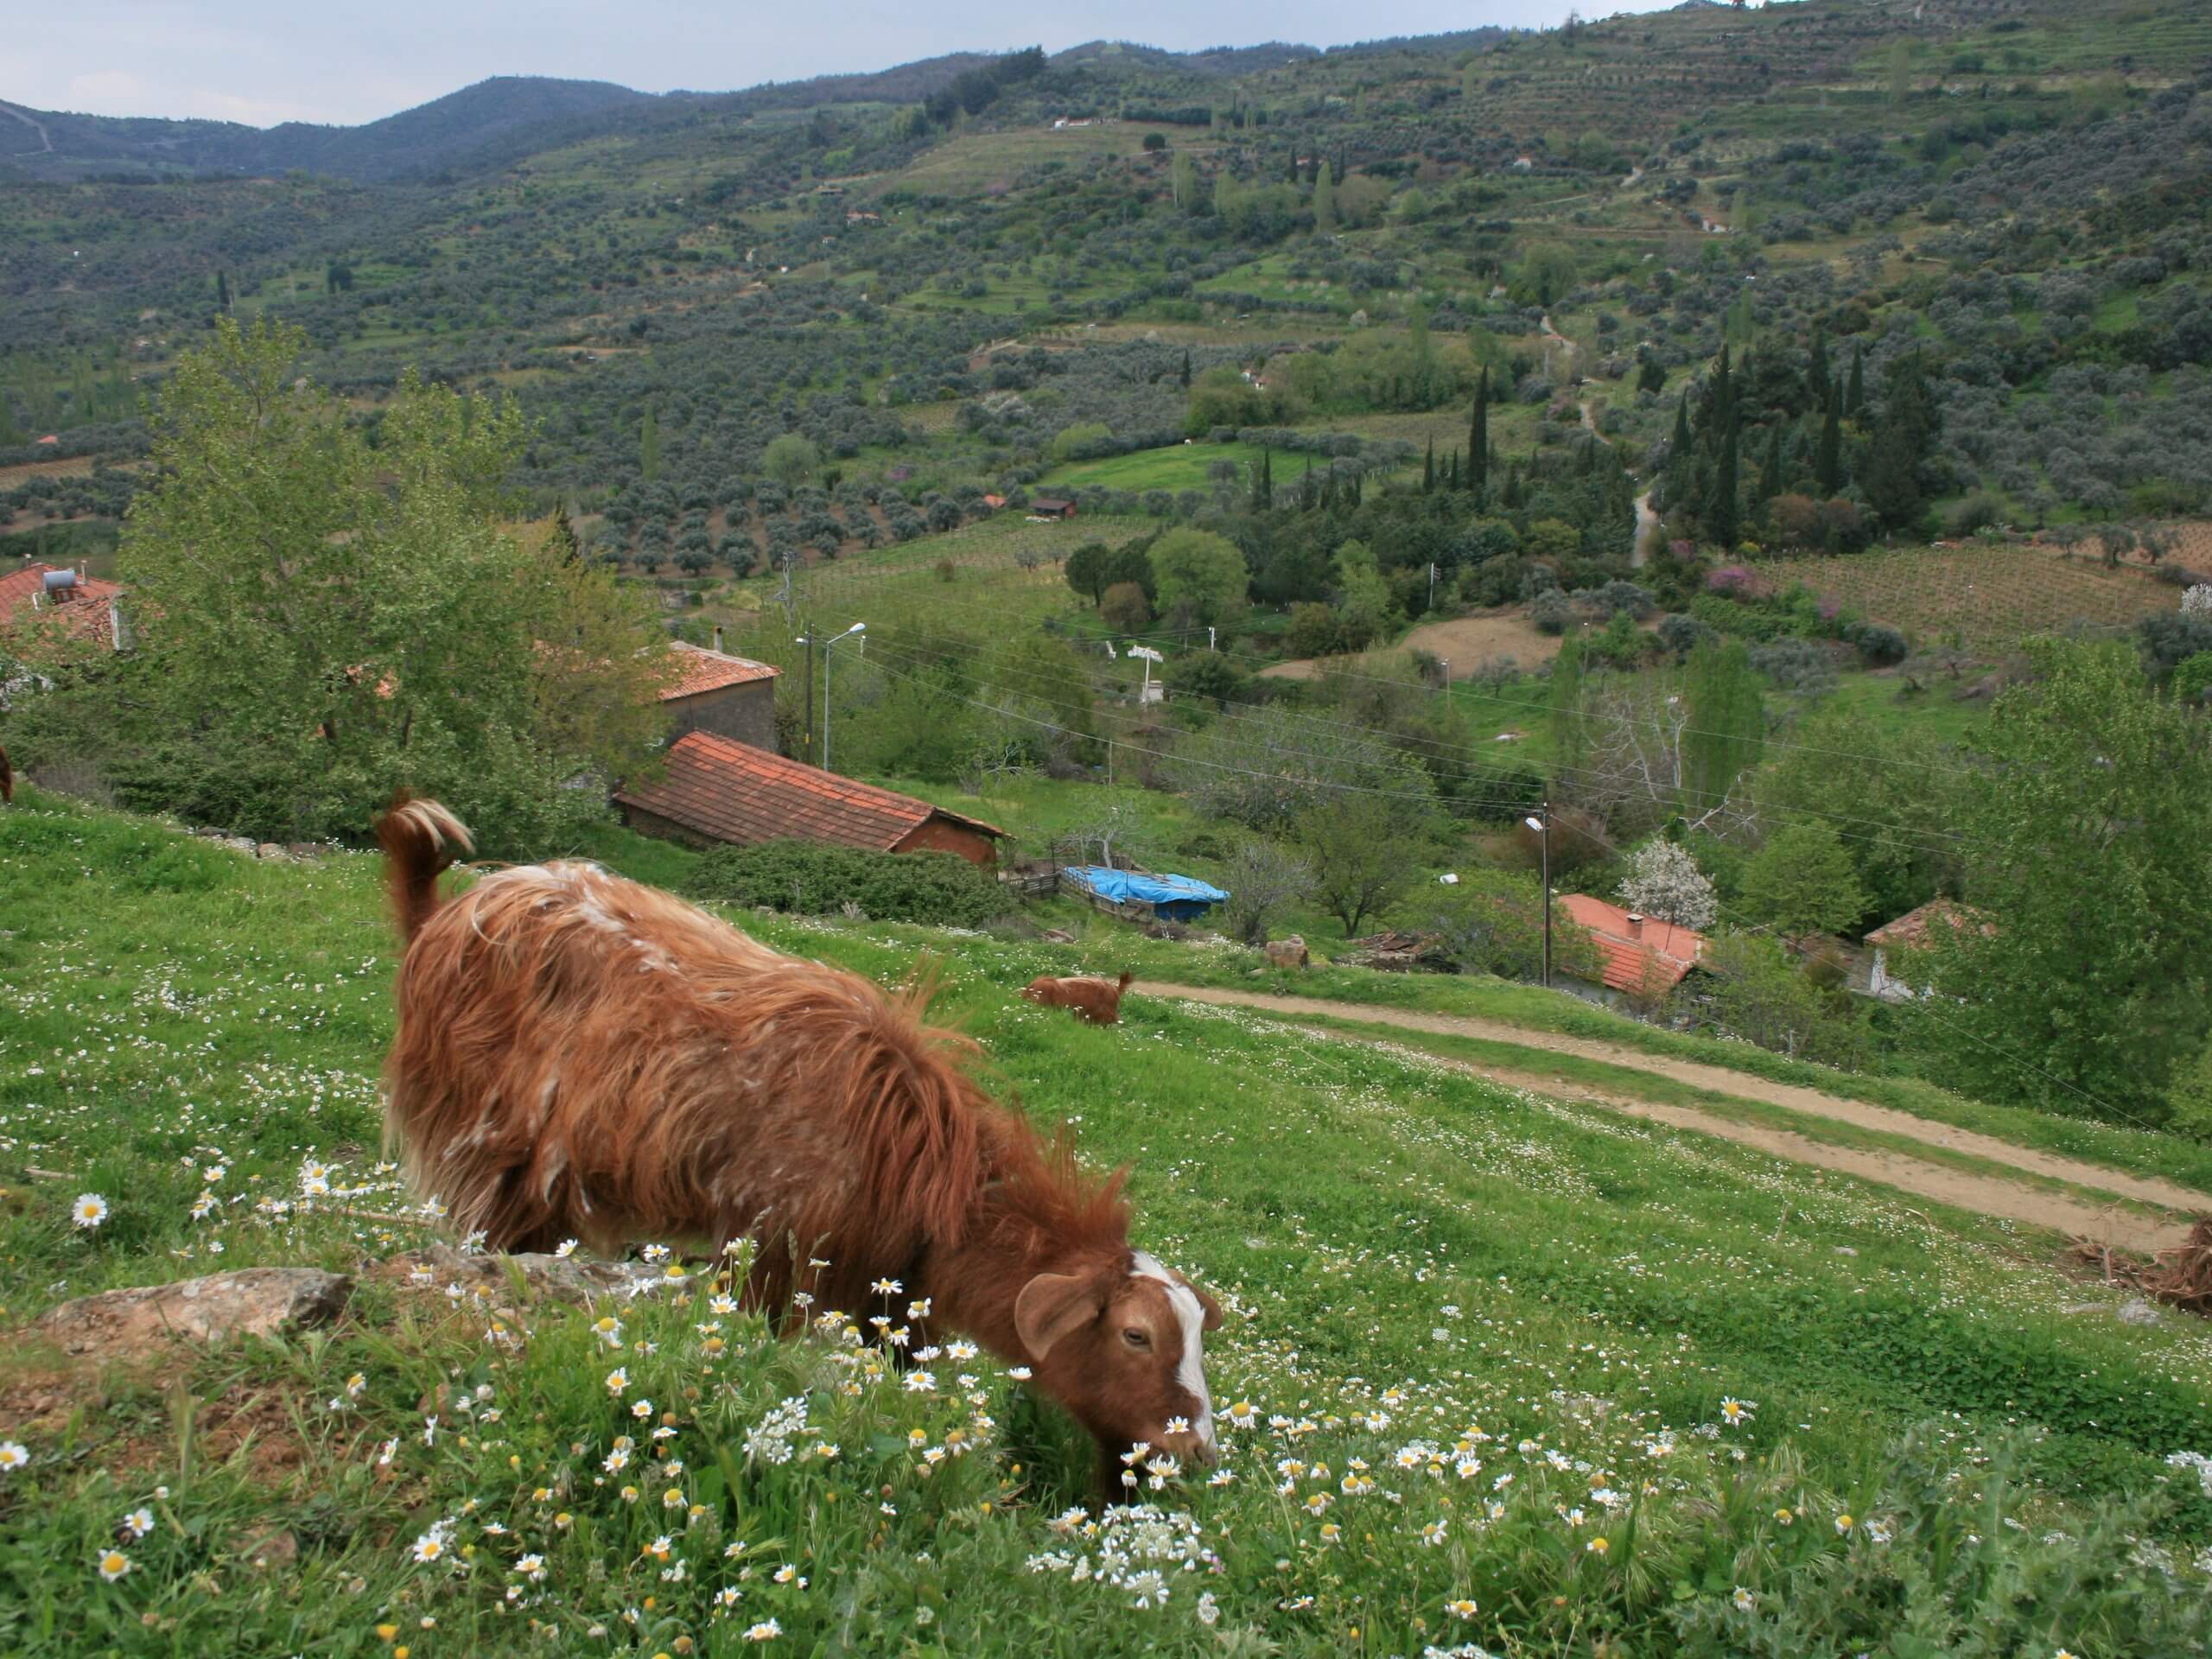 Goats in Turkian countryside